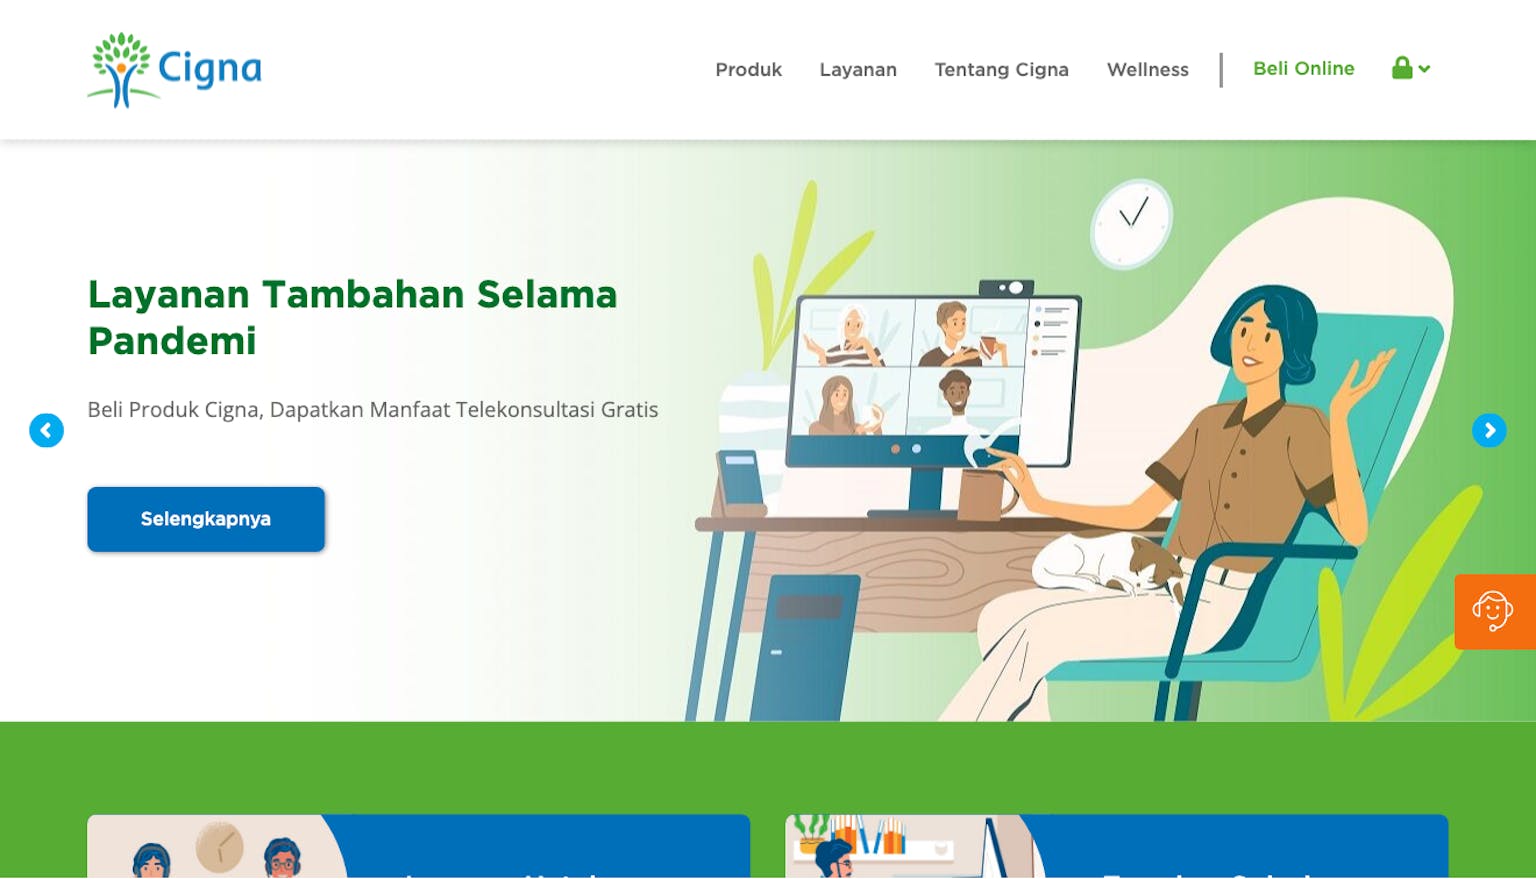 Asuransi Cigna (Merger dengan PT Chubb Life Insurance Indonesia)